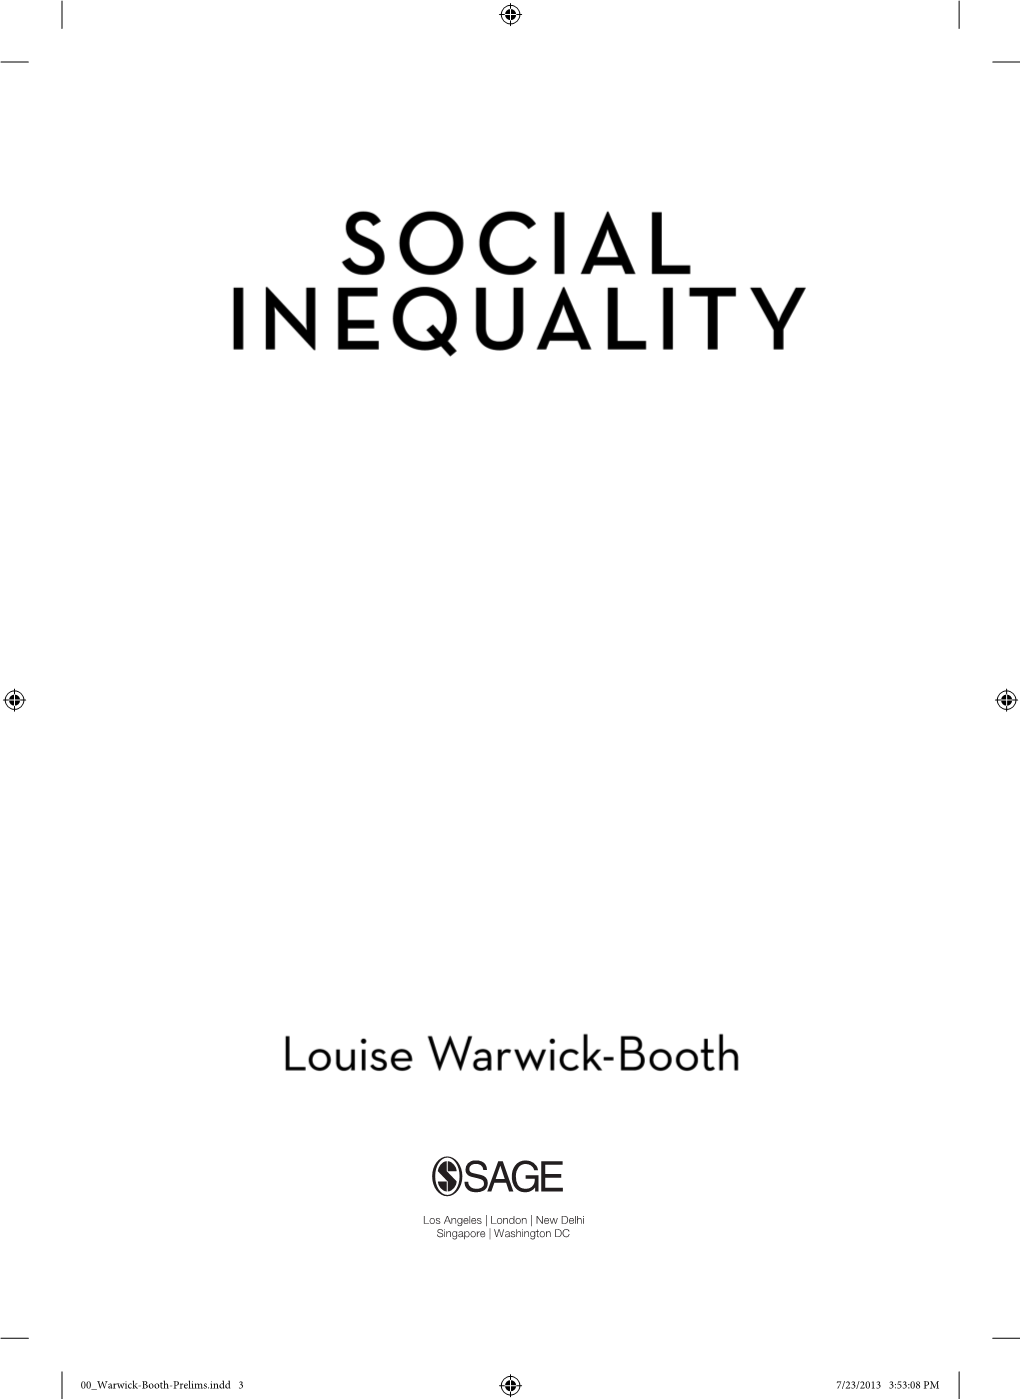 Social Inequality?